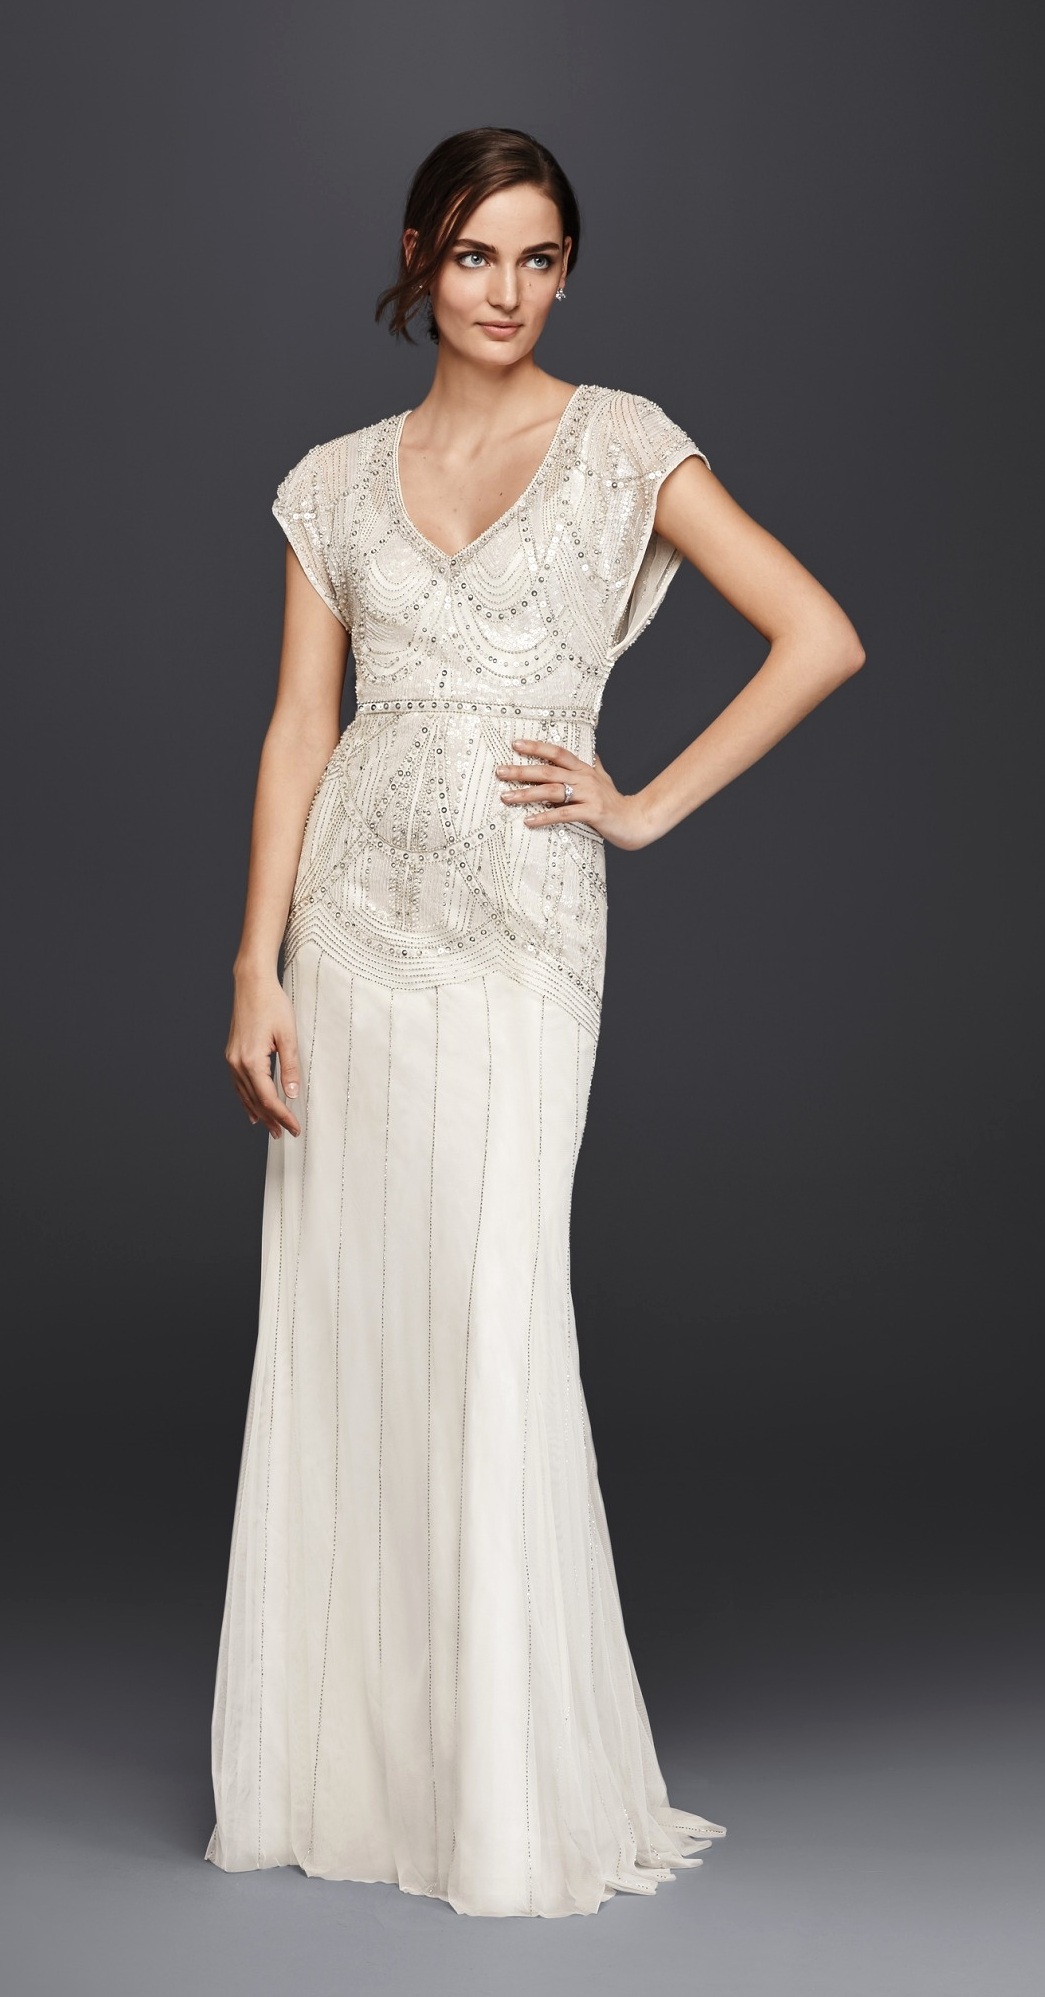 15 Most Popular Designs for Sheath Wedding Dresses | The ...